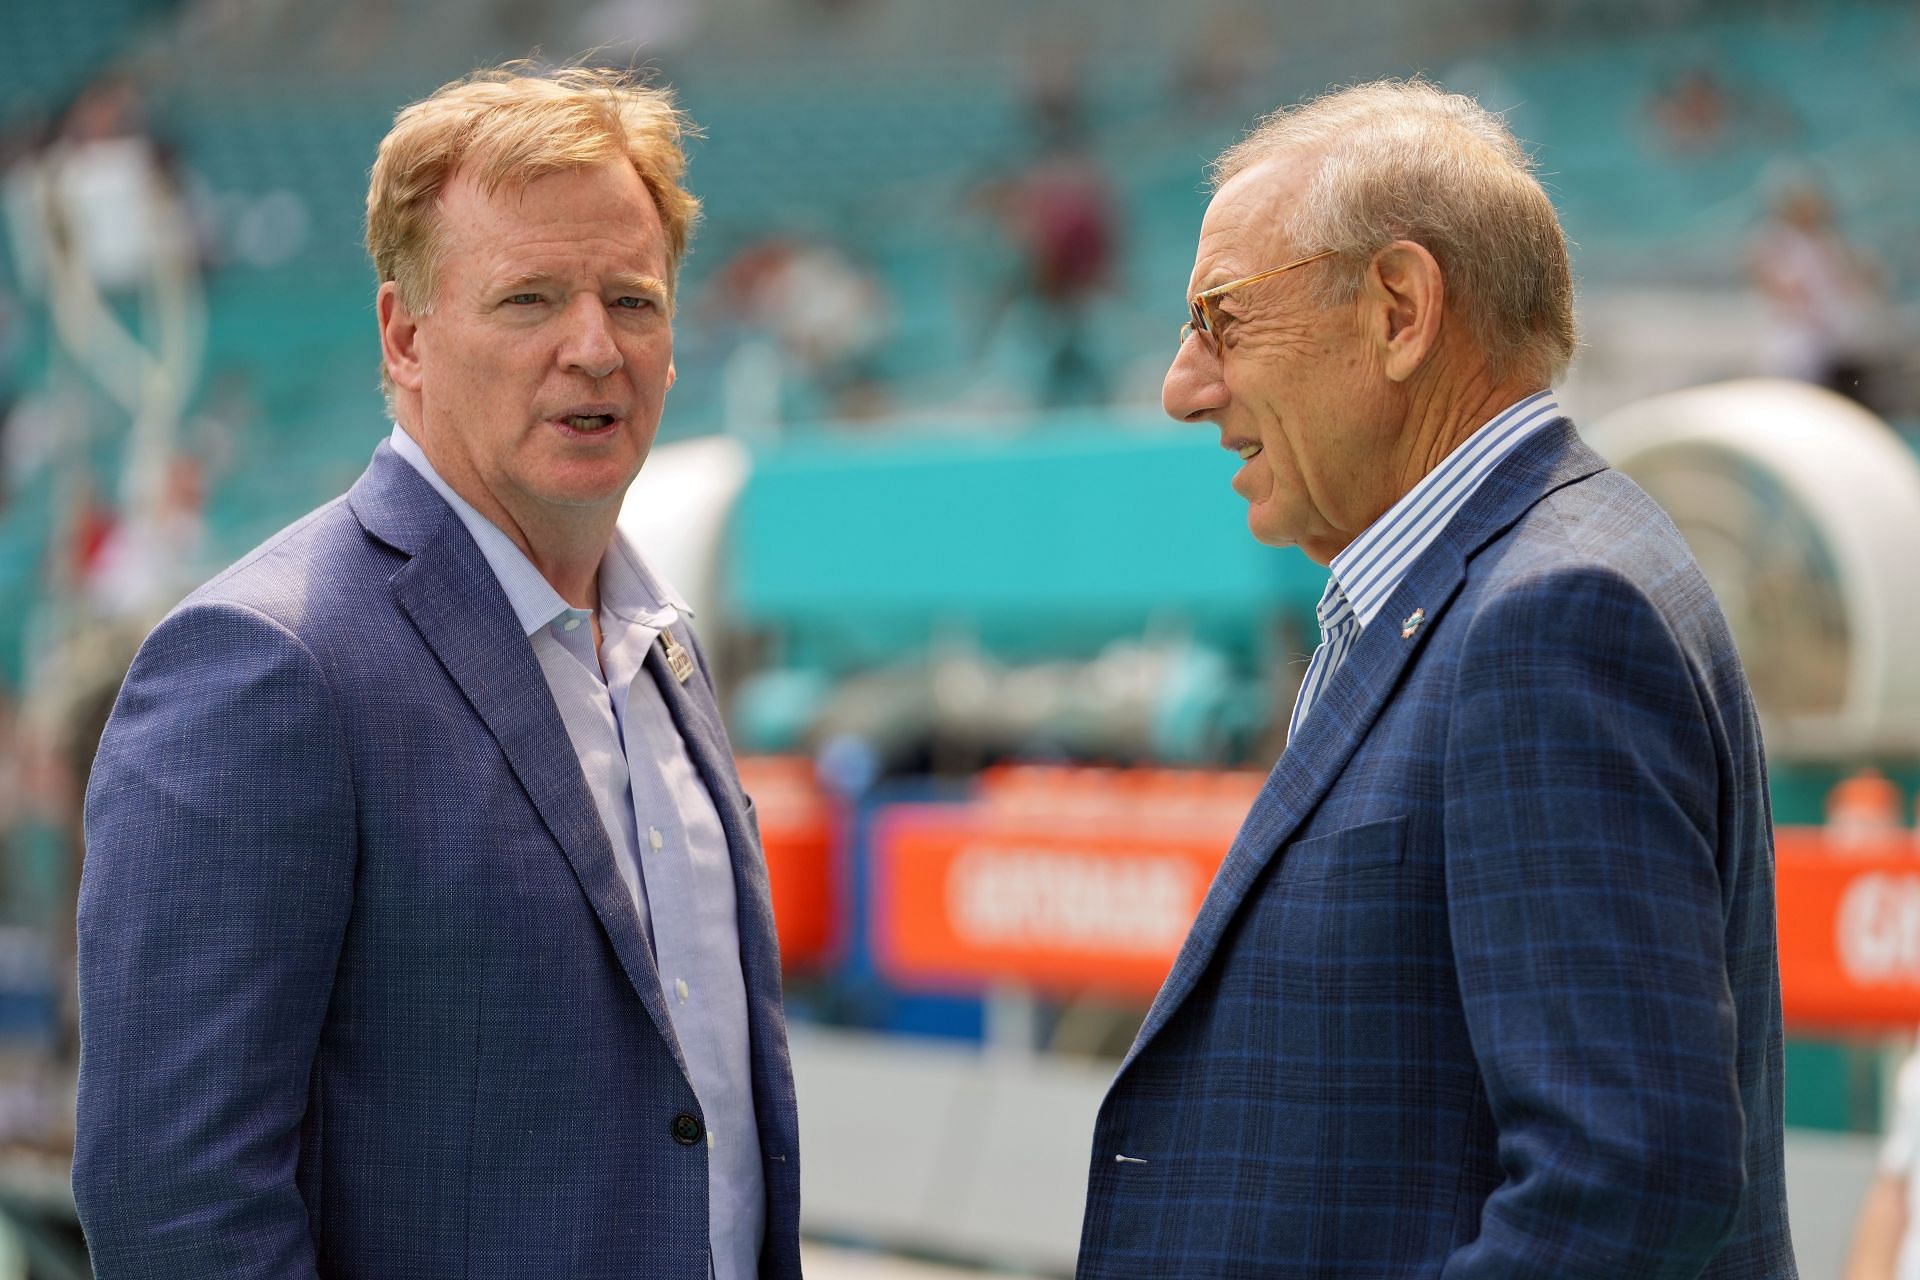 NFL commisioner Roger Goodell (left) pictured alongside Miami Dolphins owner Stephen Ross